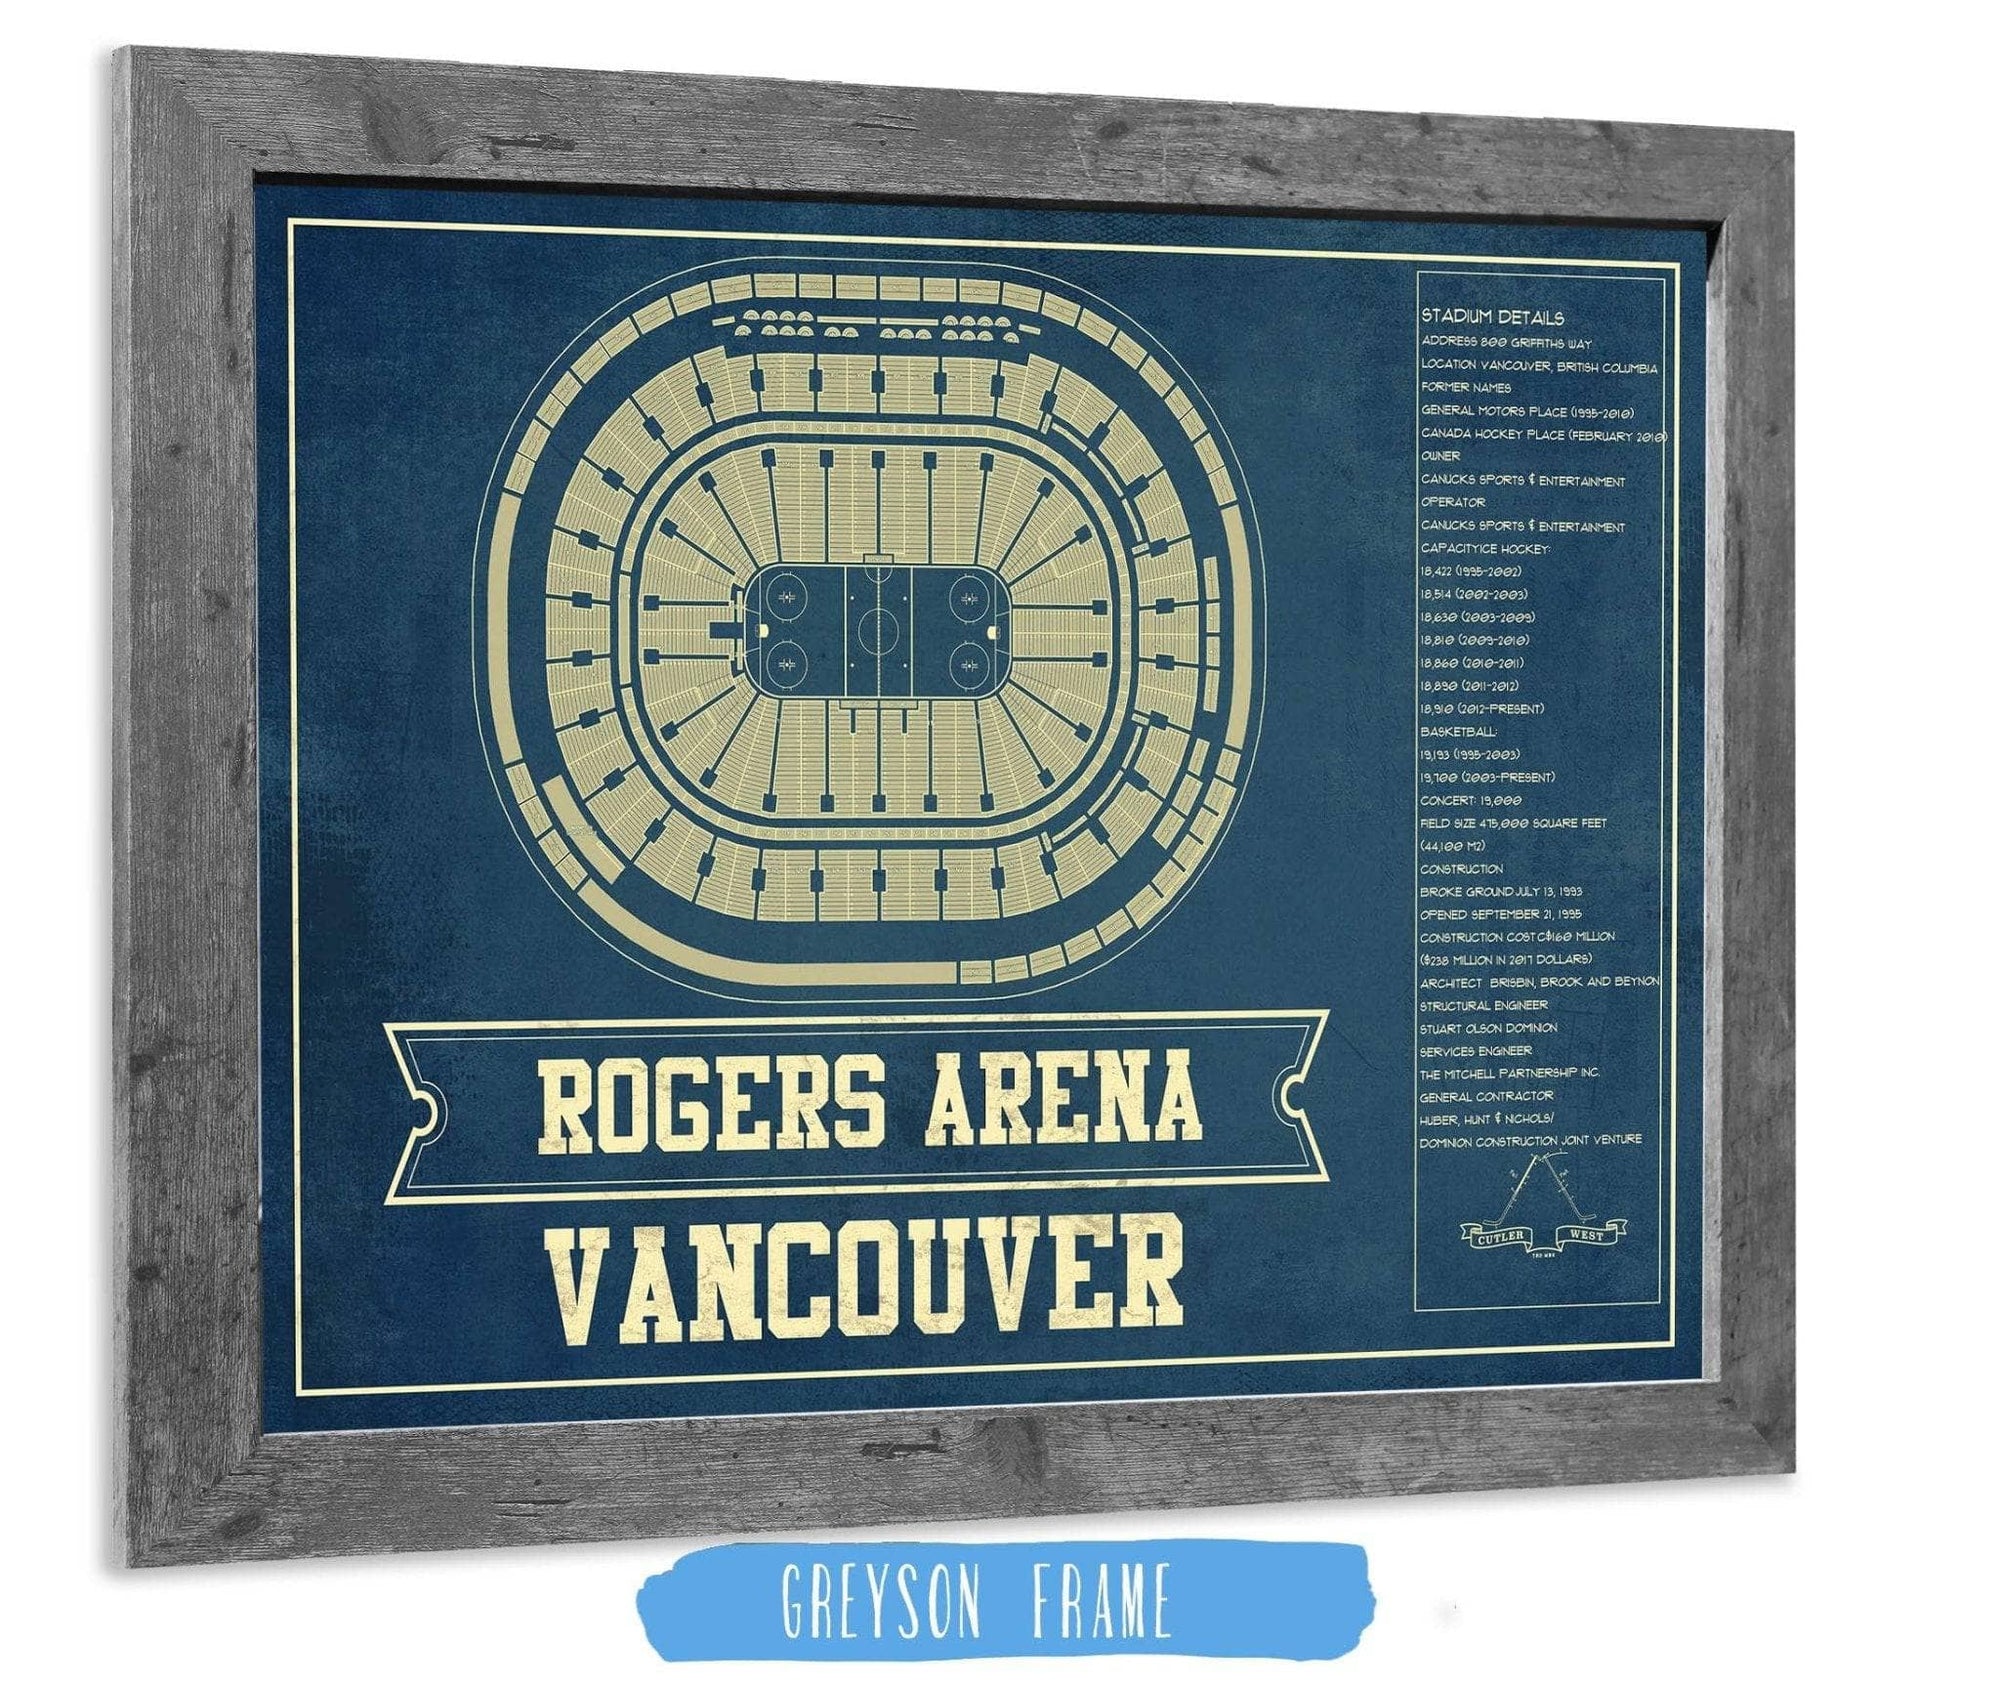 Cutler West 14" x 11" / Greyson Frame Vancouver Canucks - Rogers Arena Vintage Hockey Blueprint NHL Print 673825395_81453